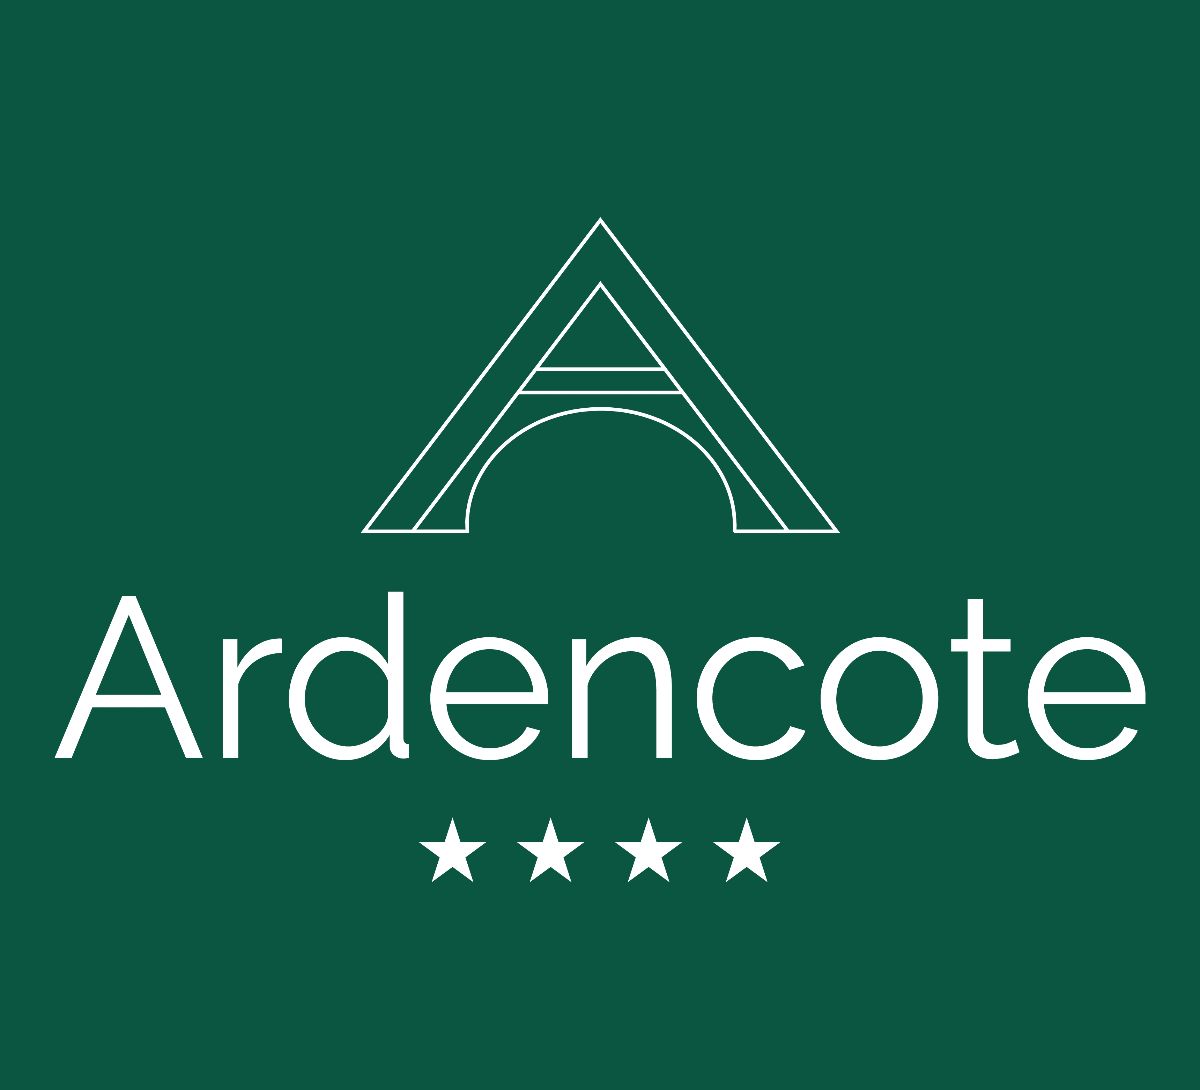 Ardencote-Image-10